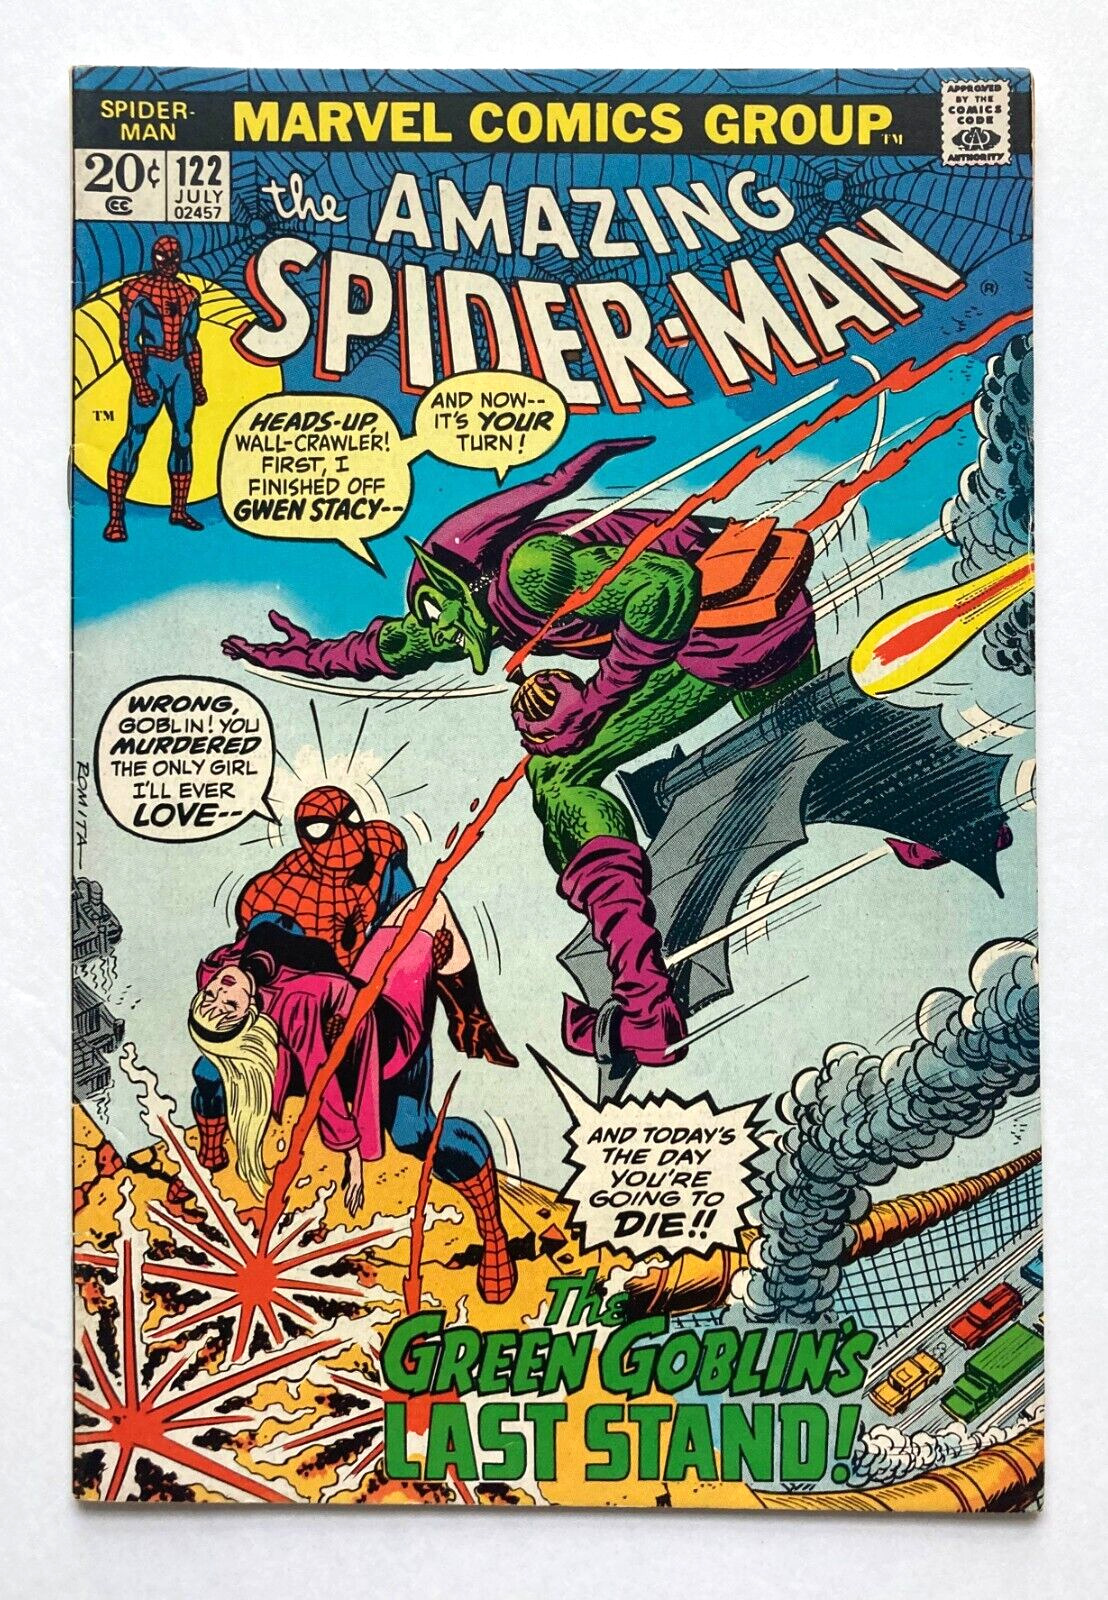 AMAZING SPIDER-MAN #122 (1973) - DEATH OF NORMAN OSBORN. NO RESERVE